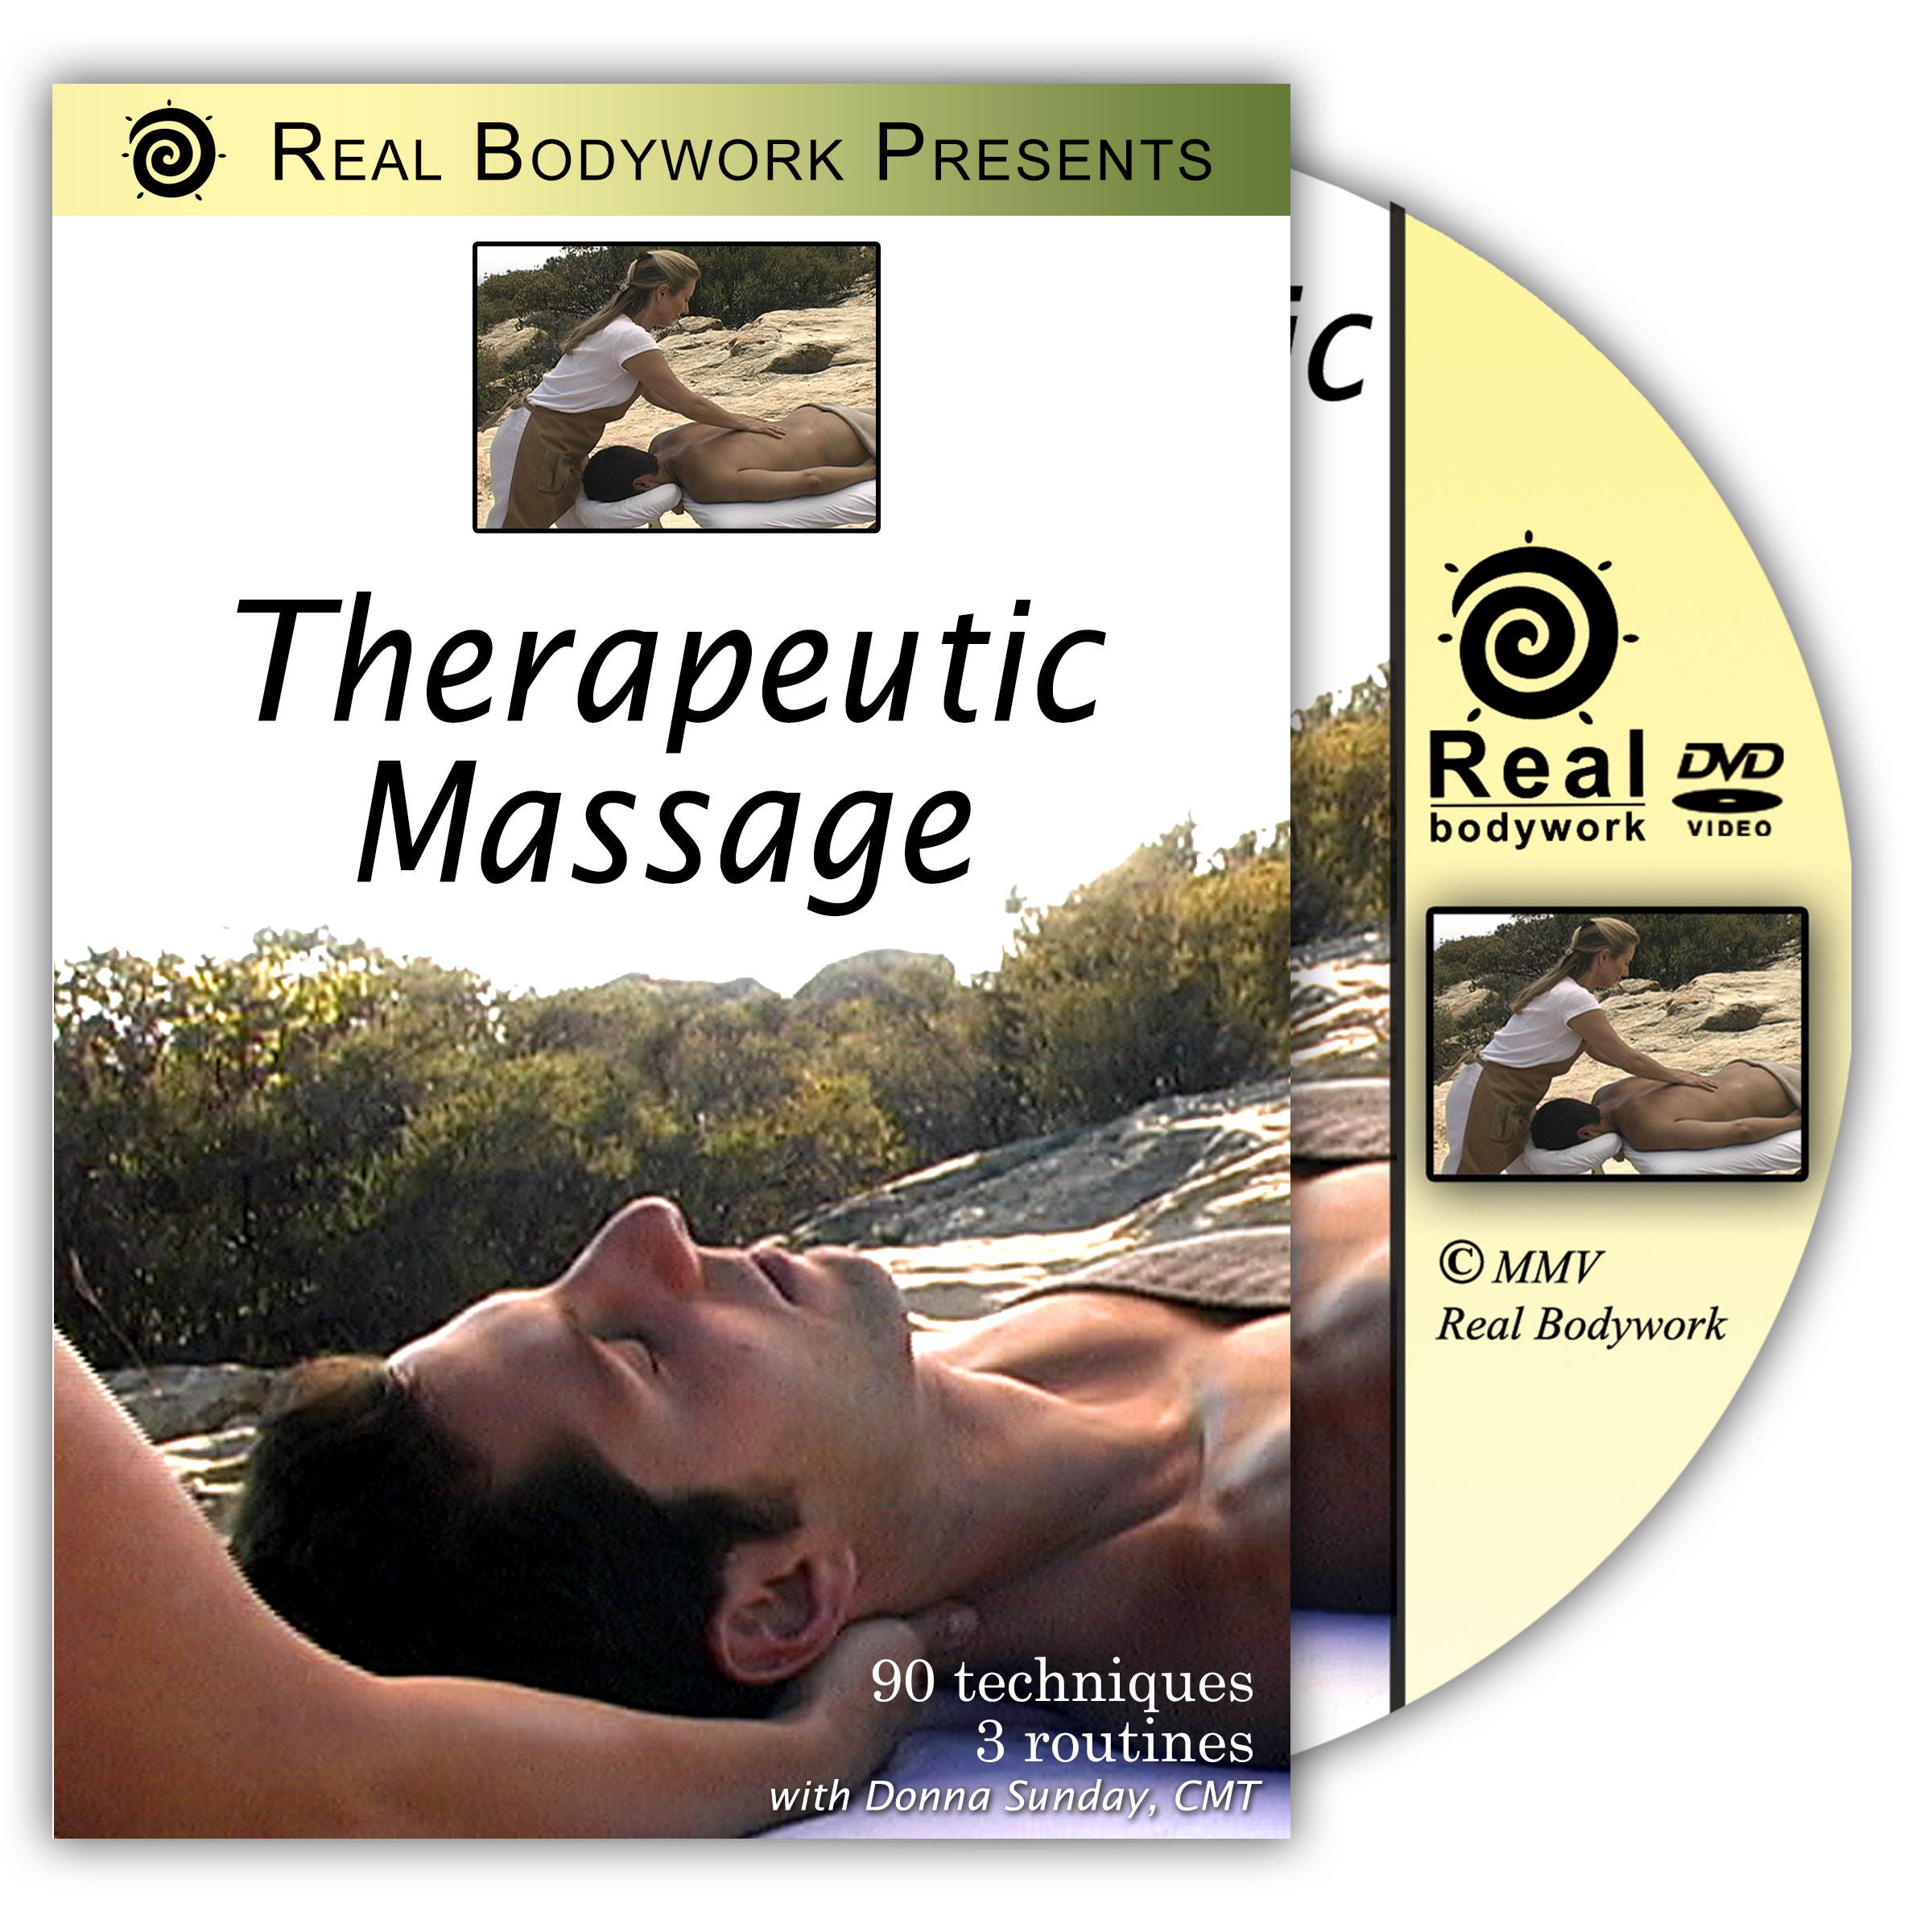 doris courtoreille share massage therapy techniques videos photos